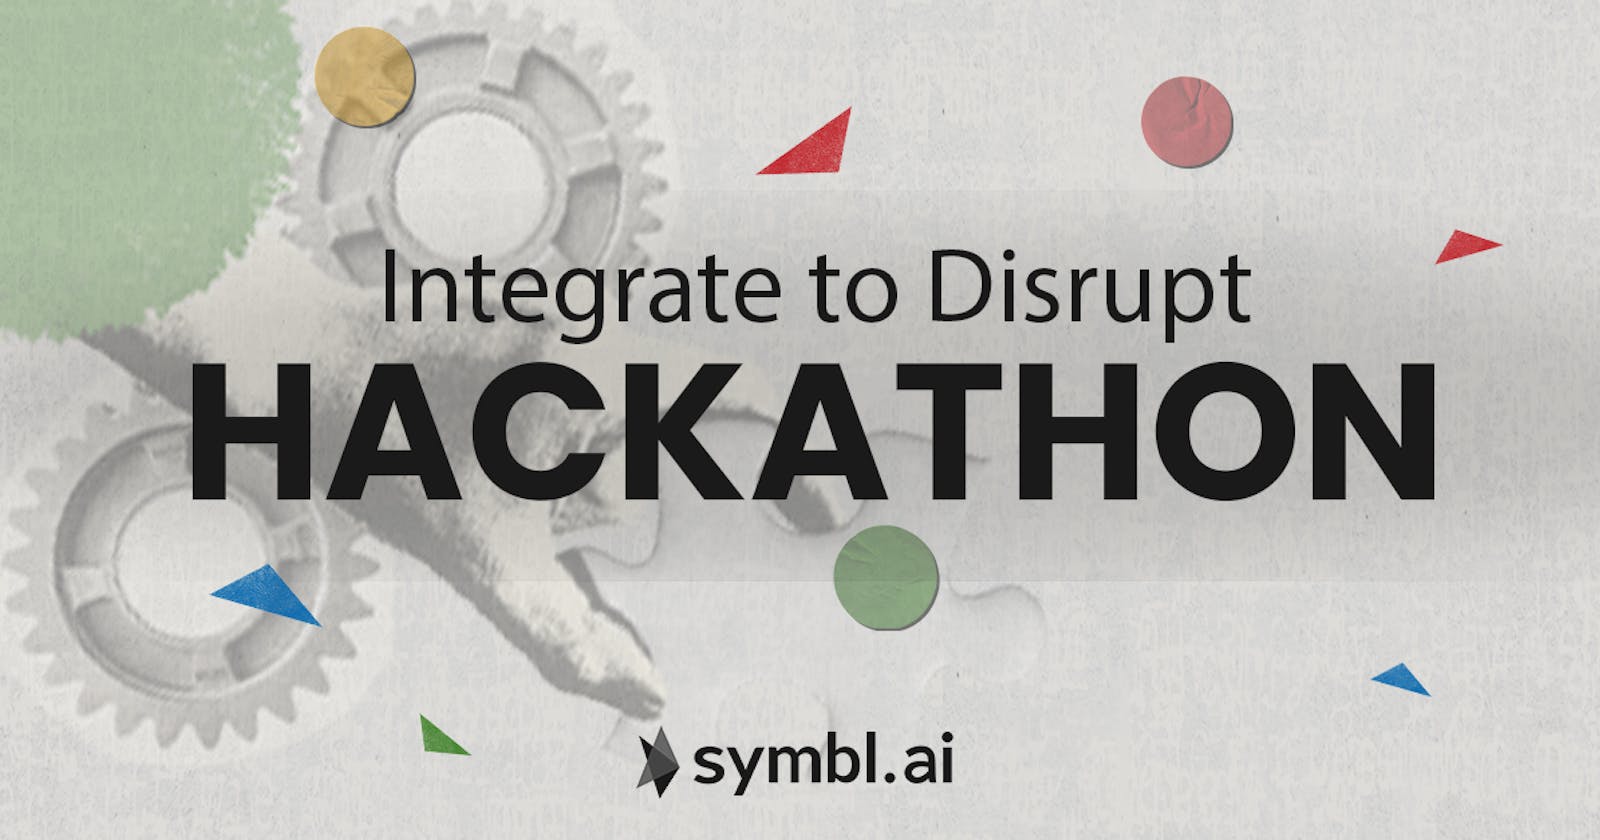 Integrate to Disrupt Hackathon by Symbl.ai